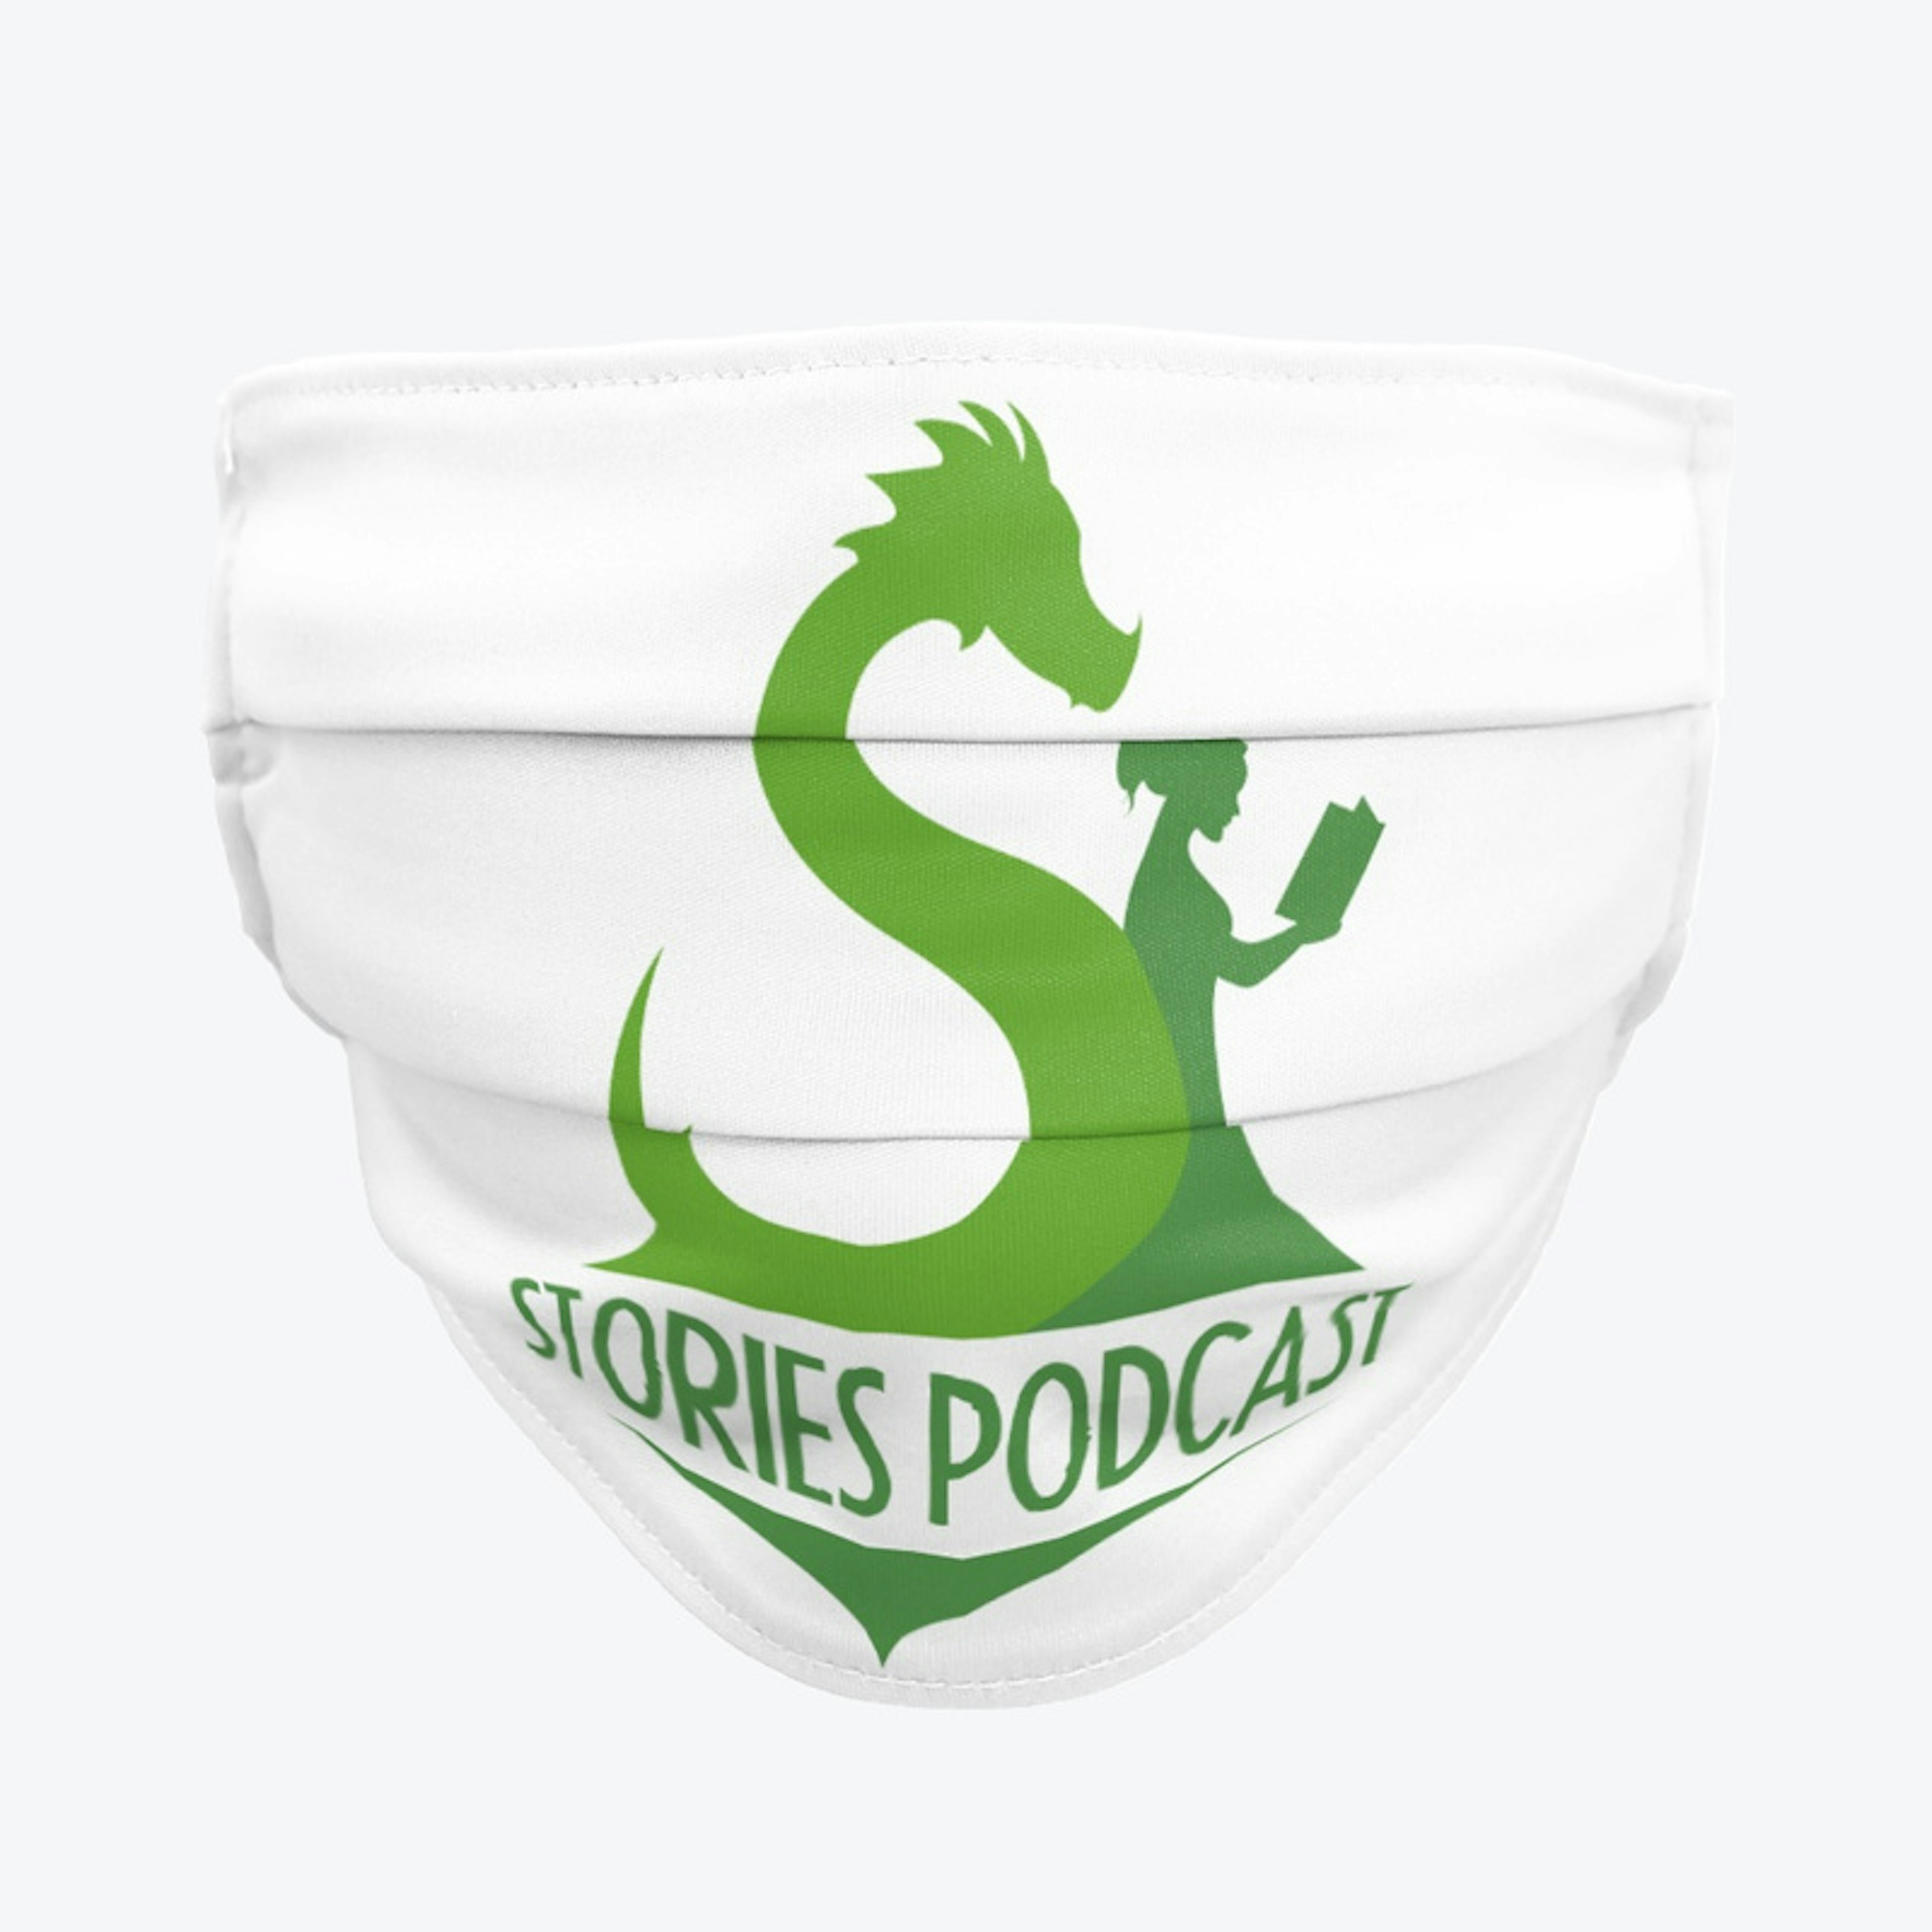 Stories Podcast Logo Gear